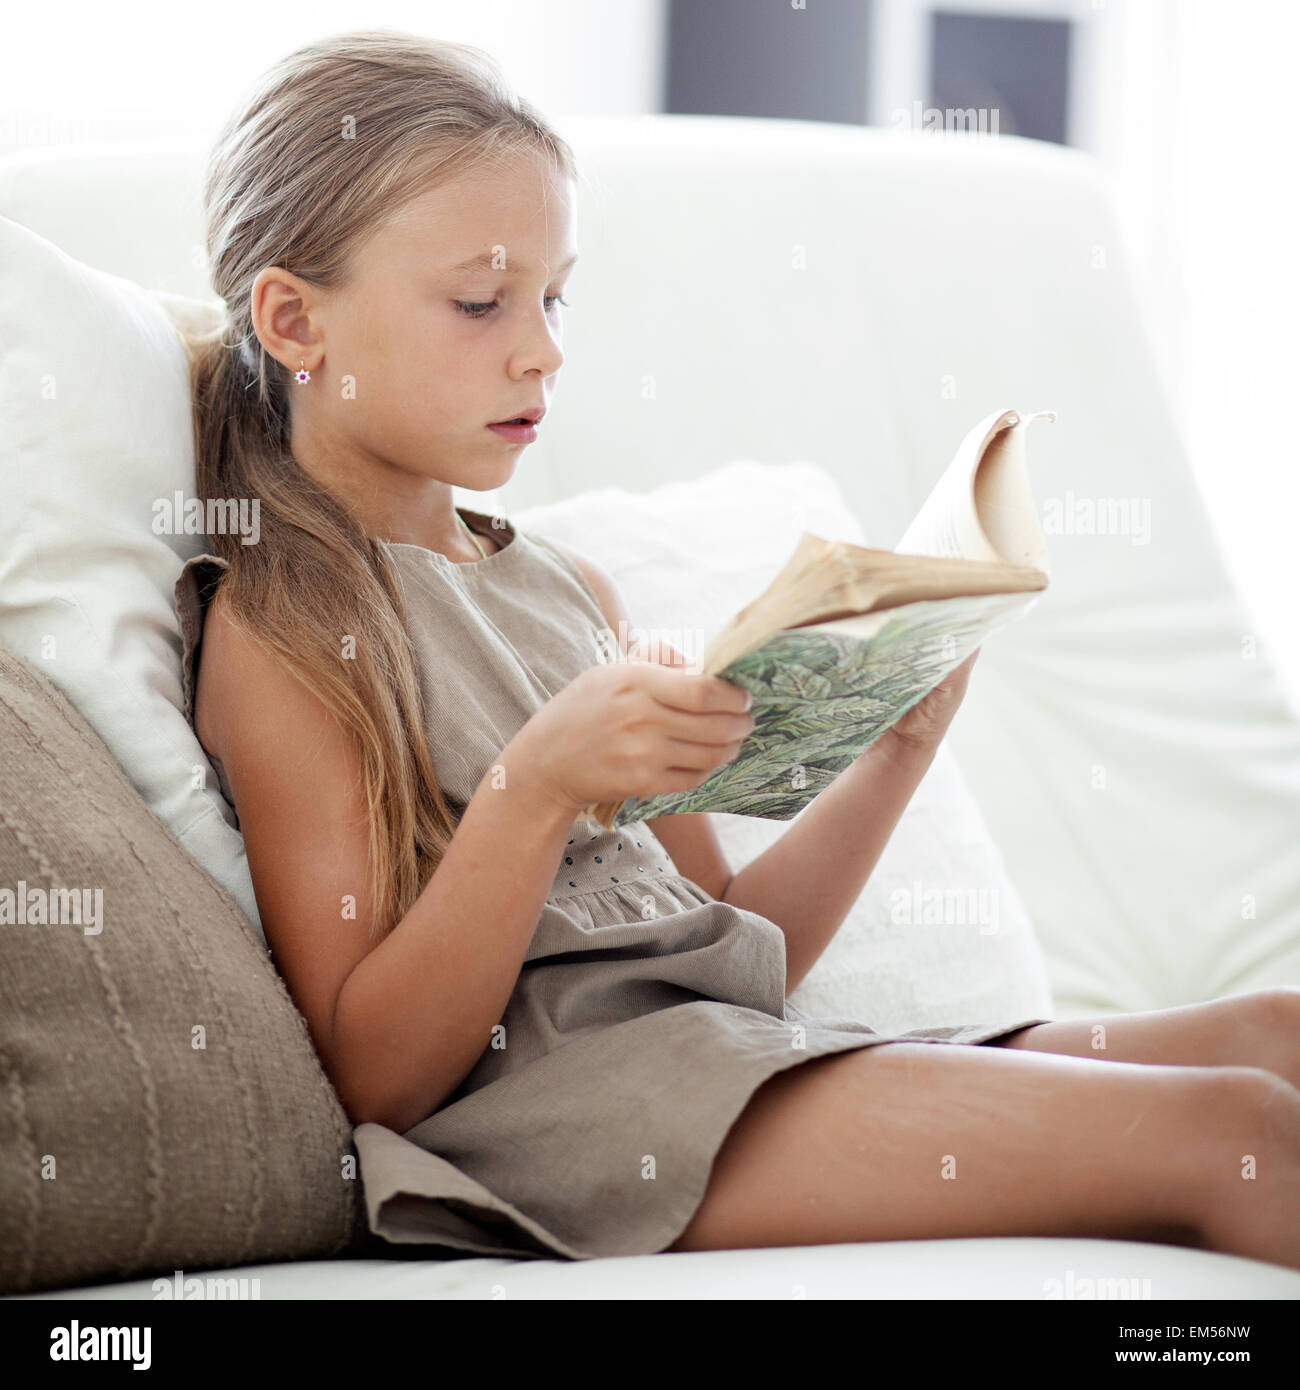 Child reading book Stock Photo